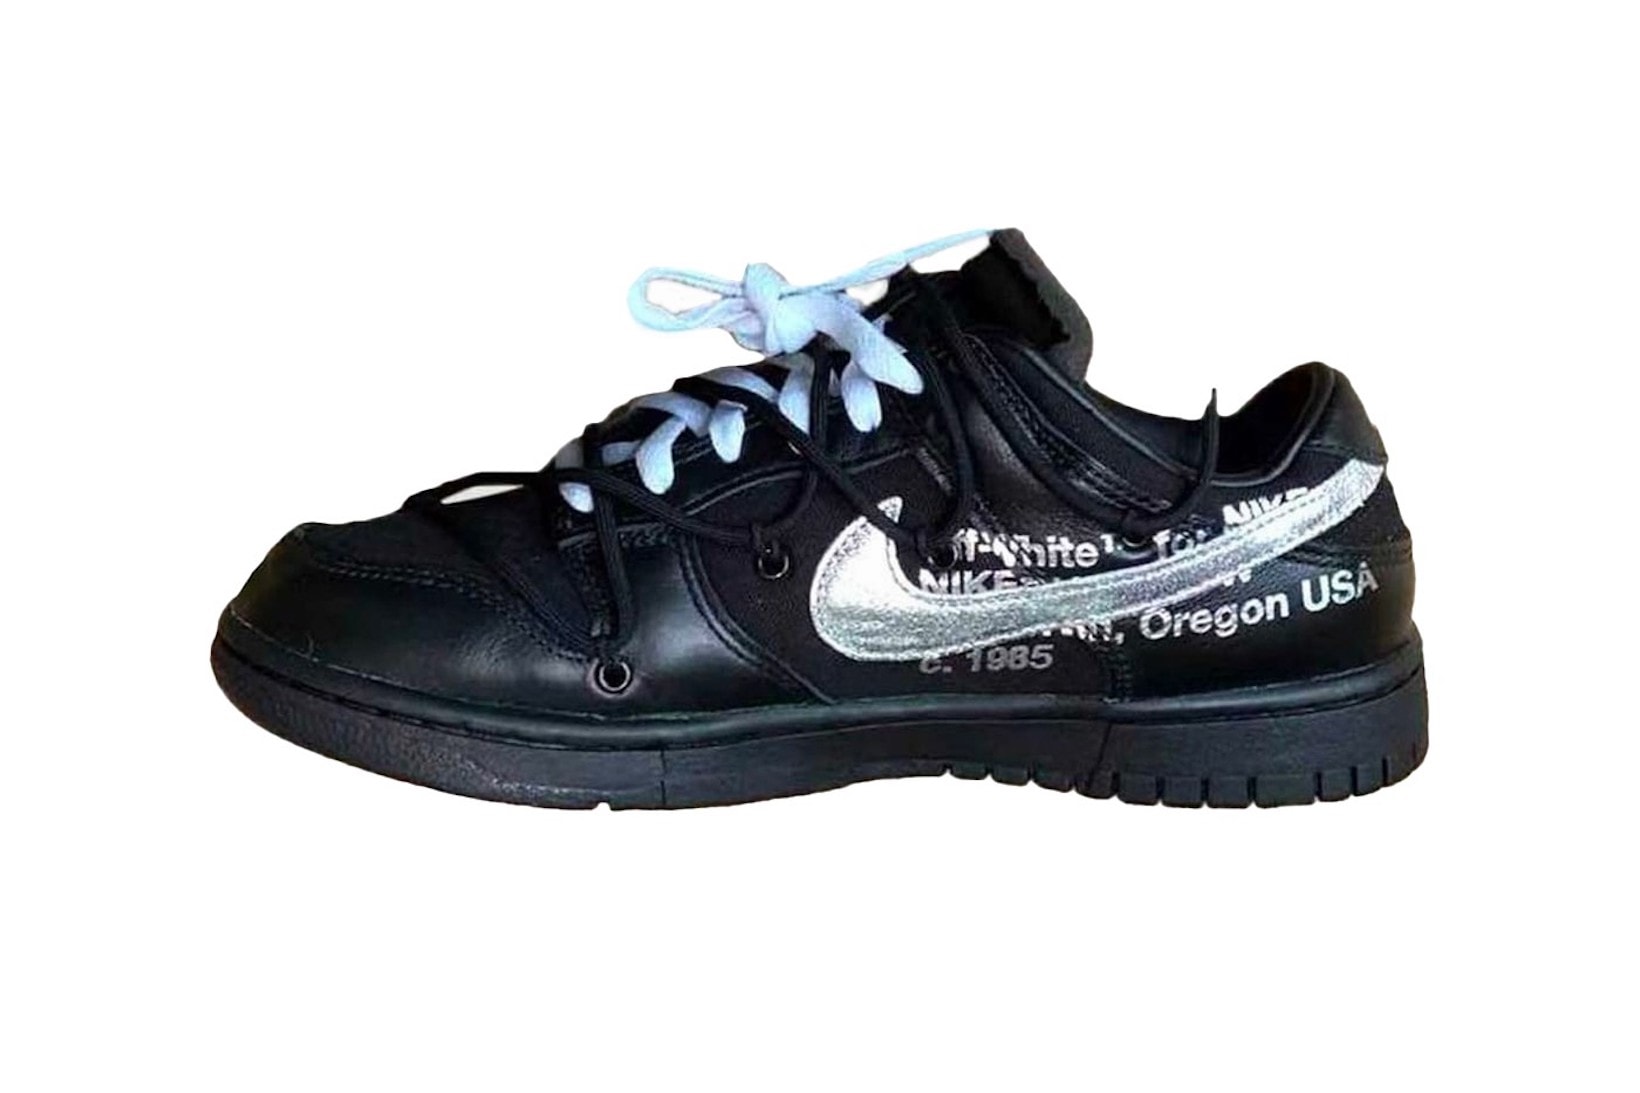 off white nike virgil abloh 50 dunk low sneakers collaboration footwear kicks shoes sneakerhead black blue lateral